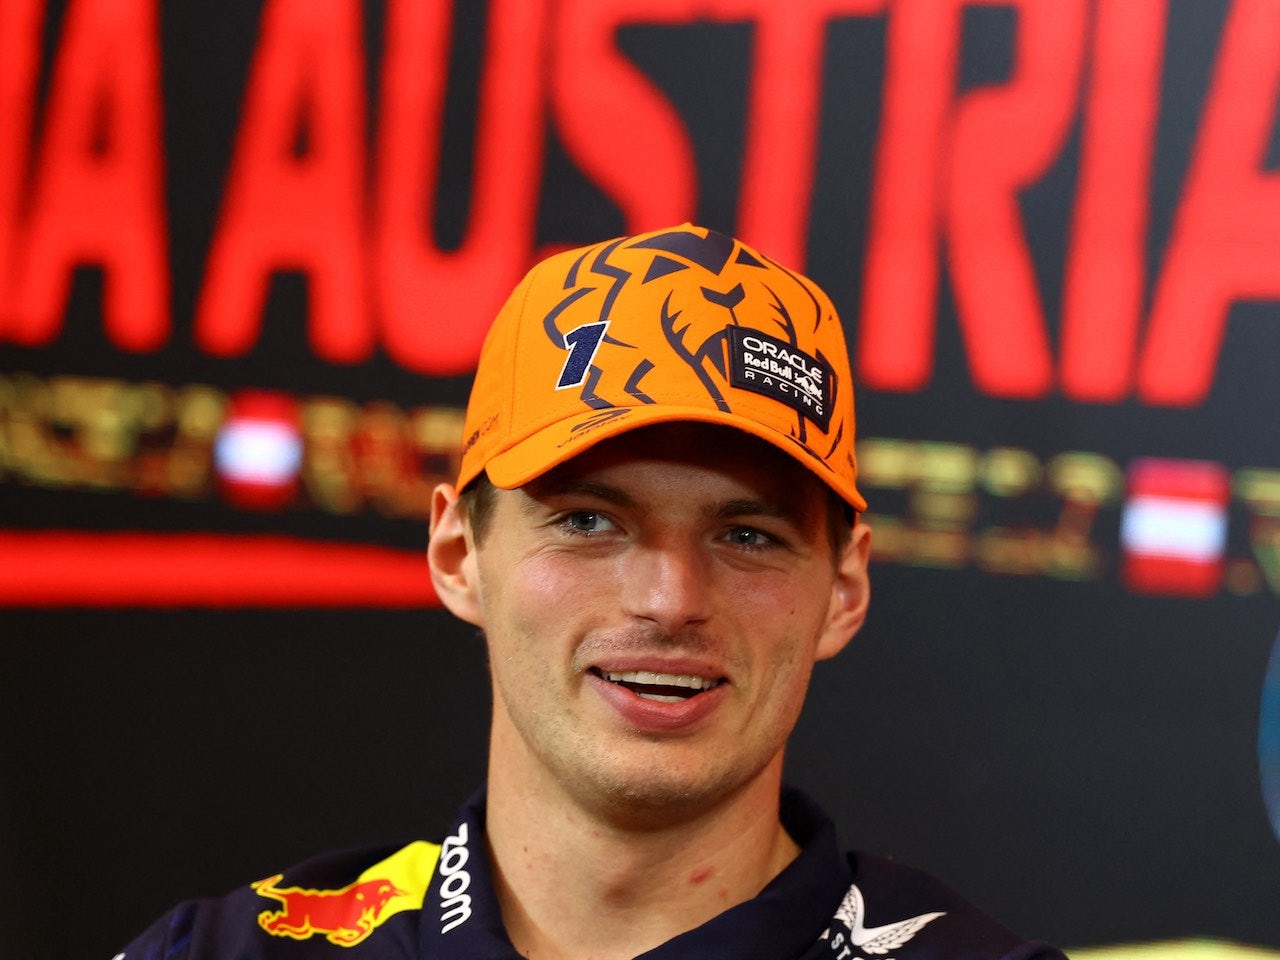 Max Verstappen claims win in Austrian Sprint